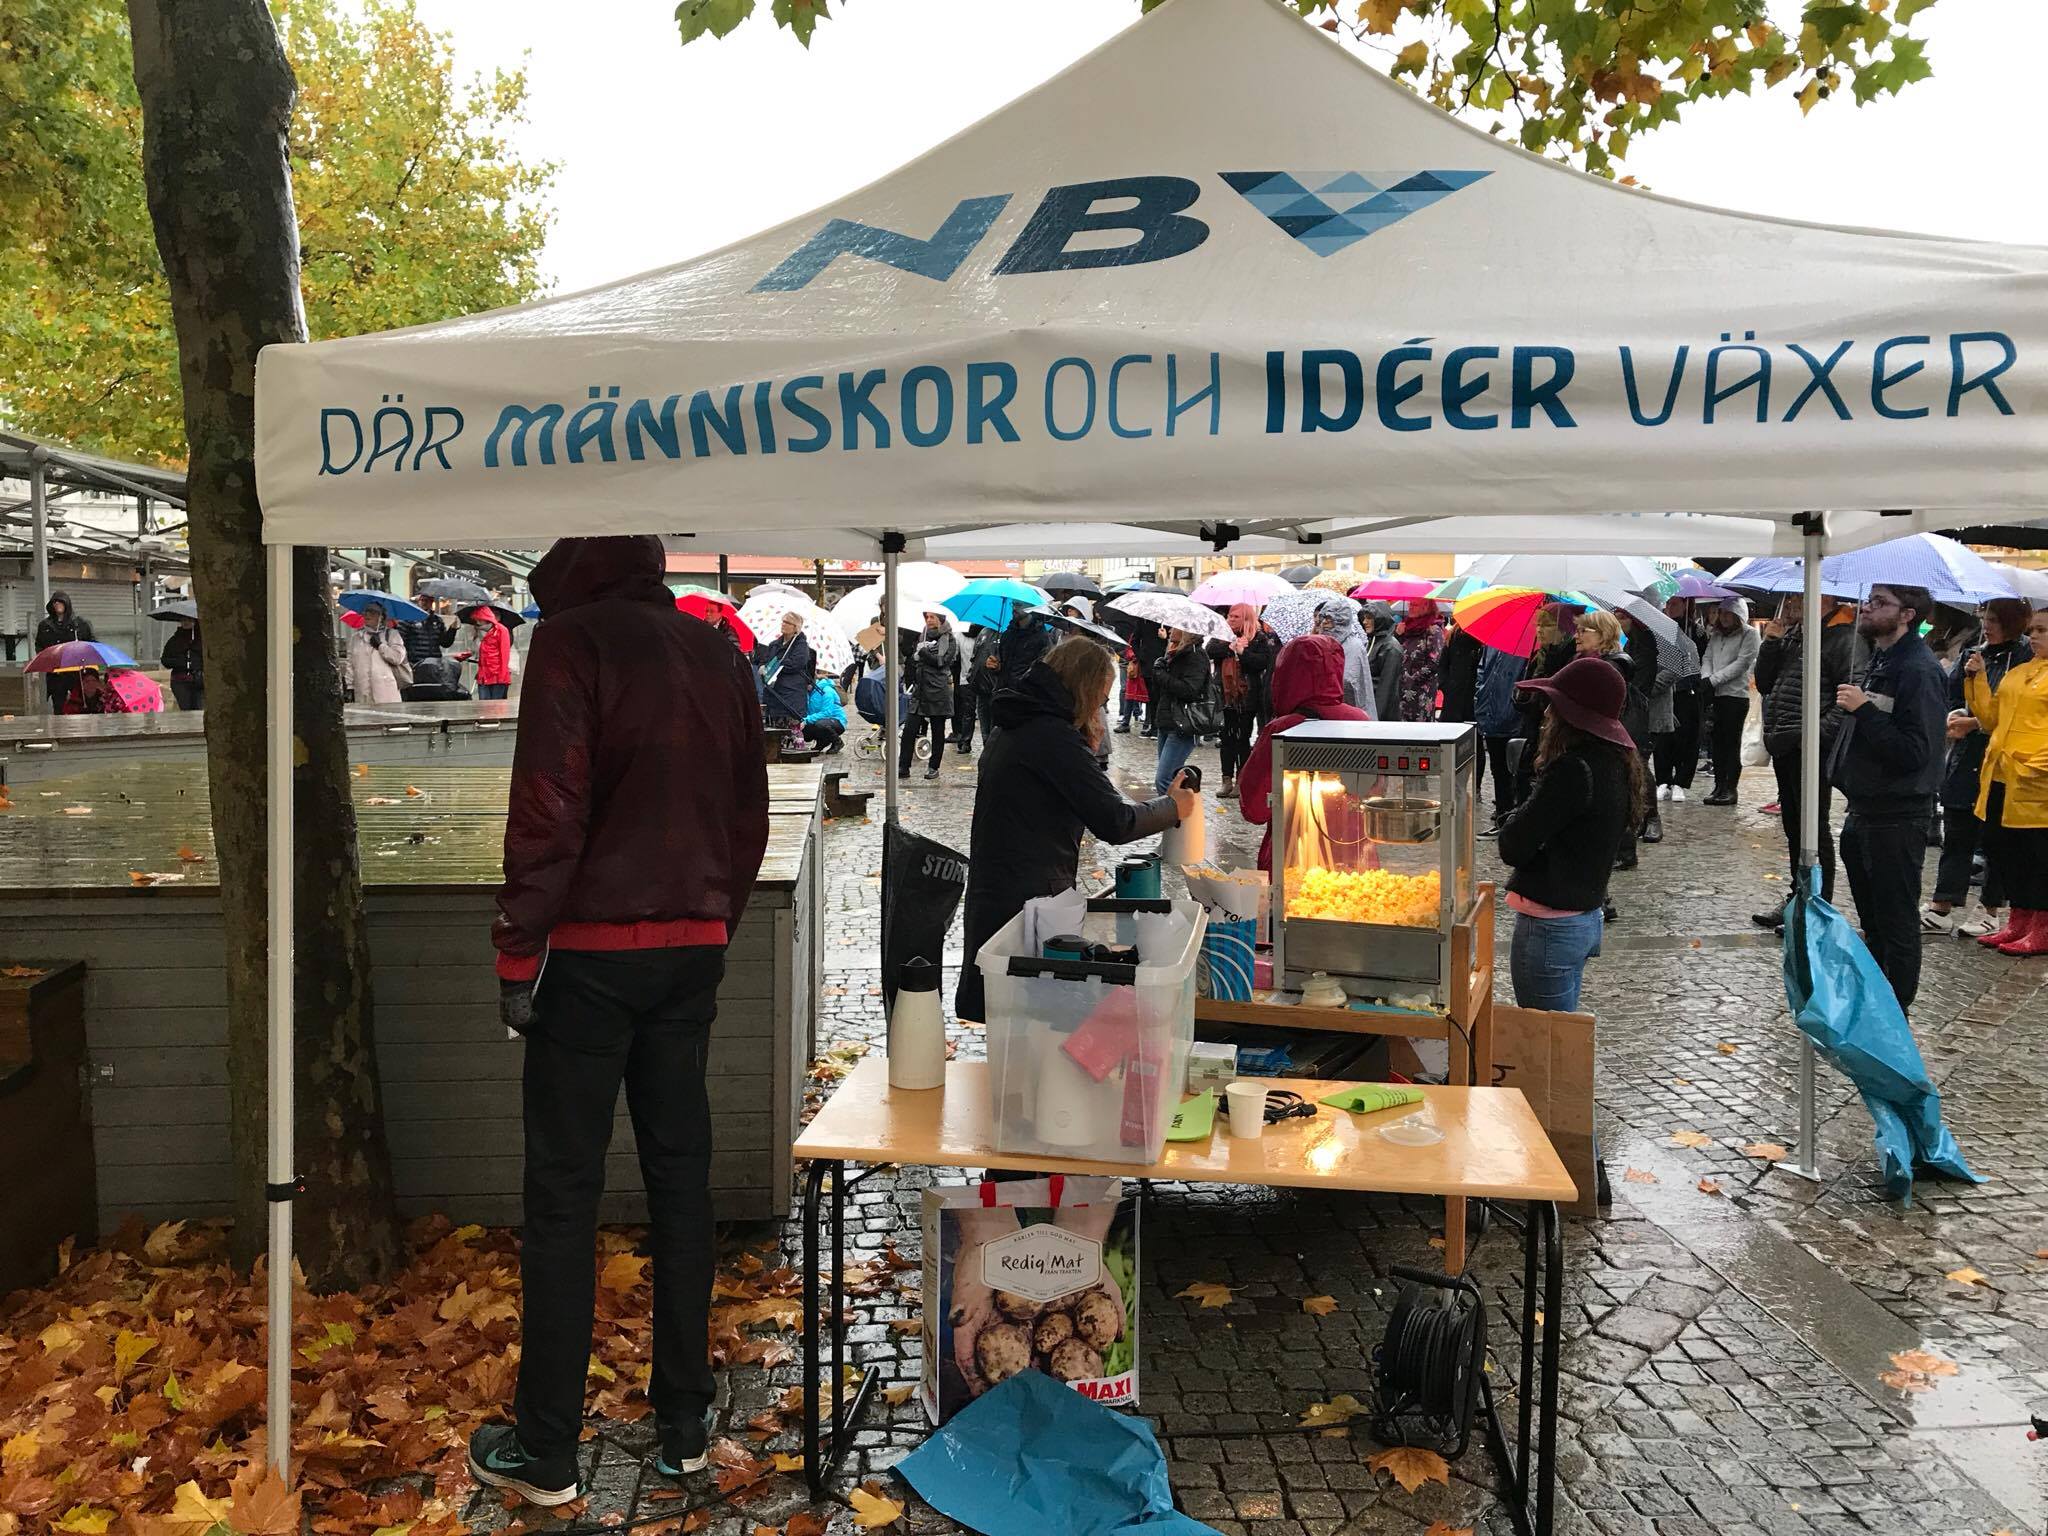 Manifestation i Kalmar. 